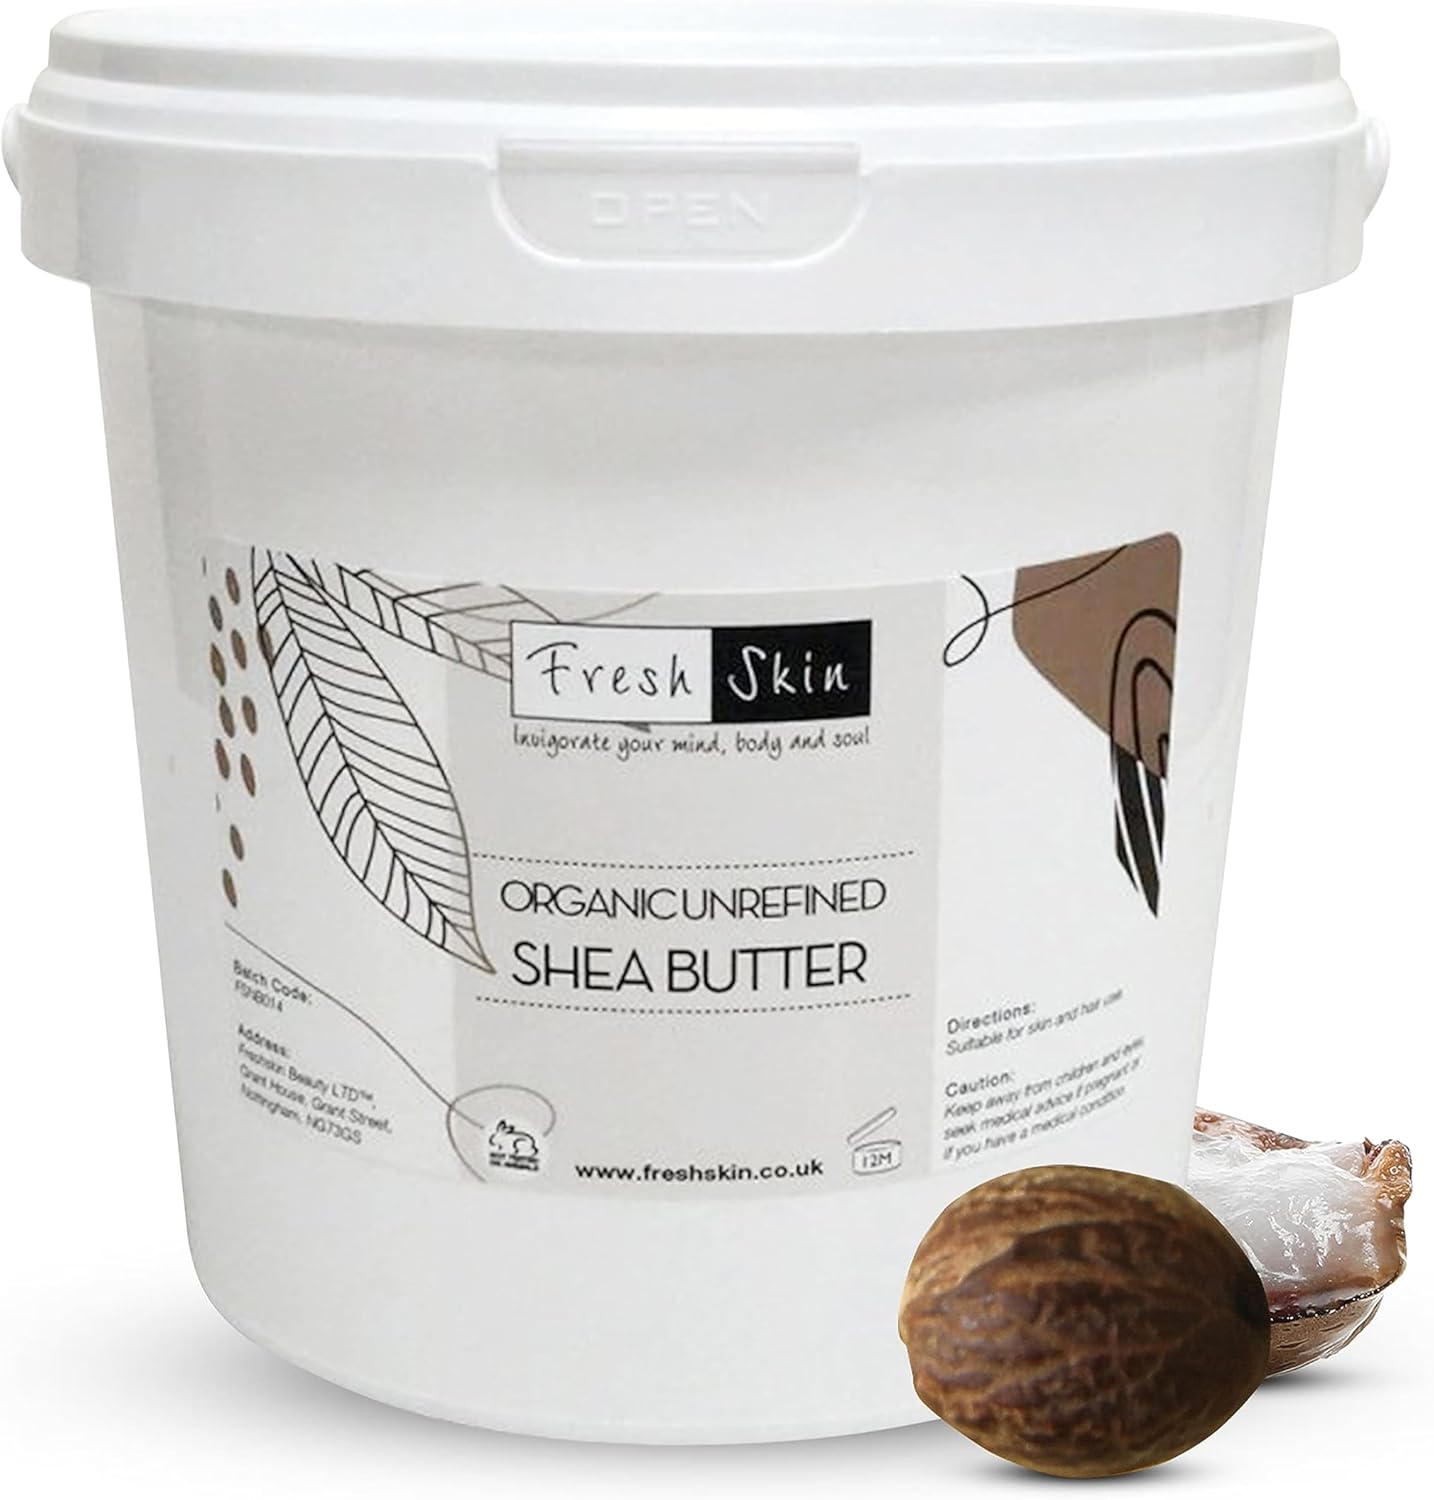 freshskin beauty ltd | 1KG Shea Butter Certified Organic - Unrefined, Cold Pressed, 100% Pure, Raw & Natural (1000g)